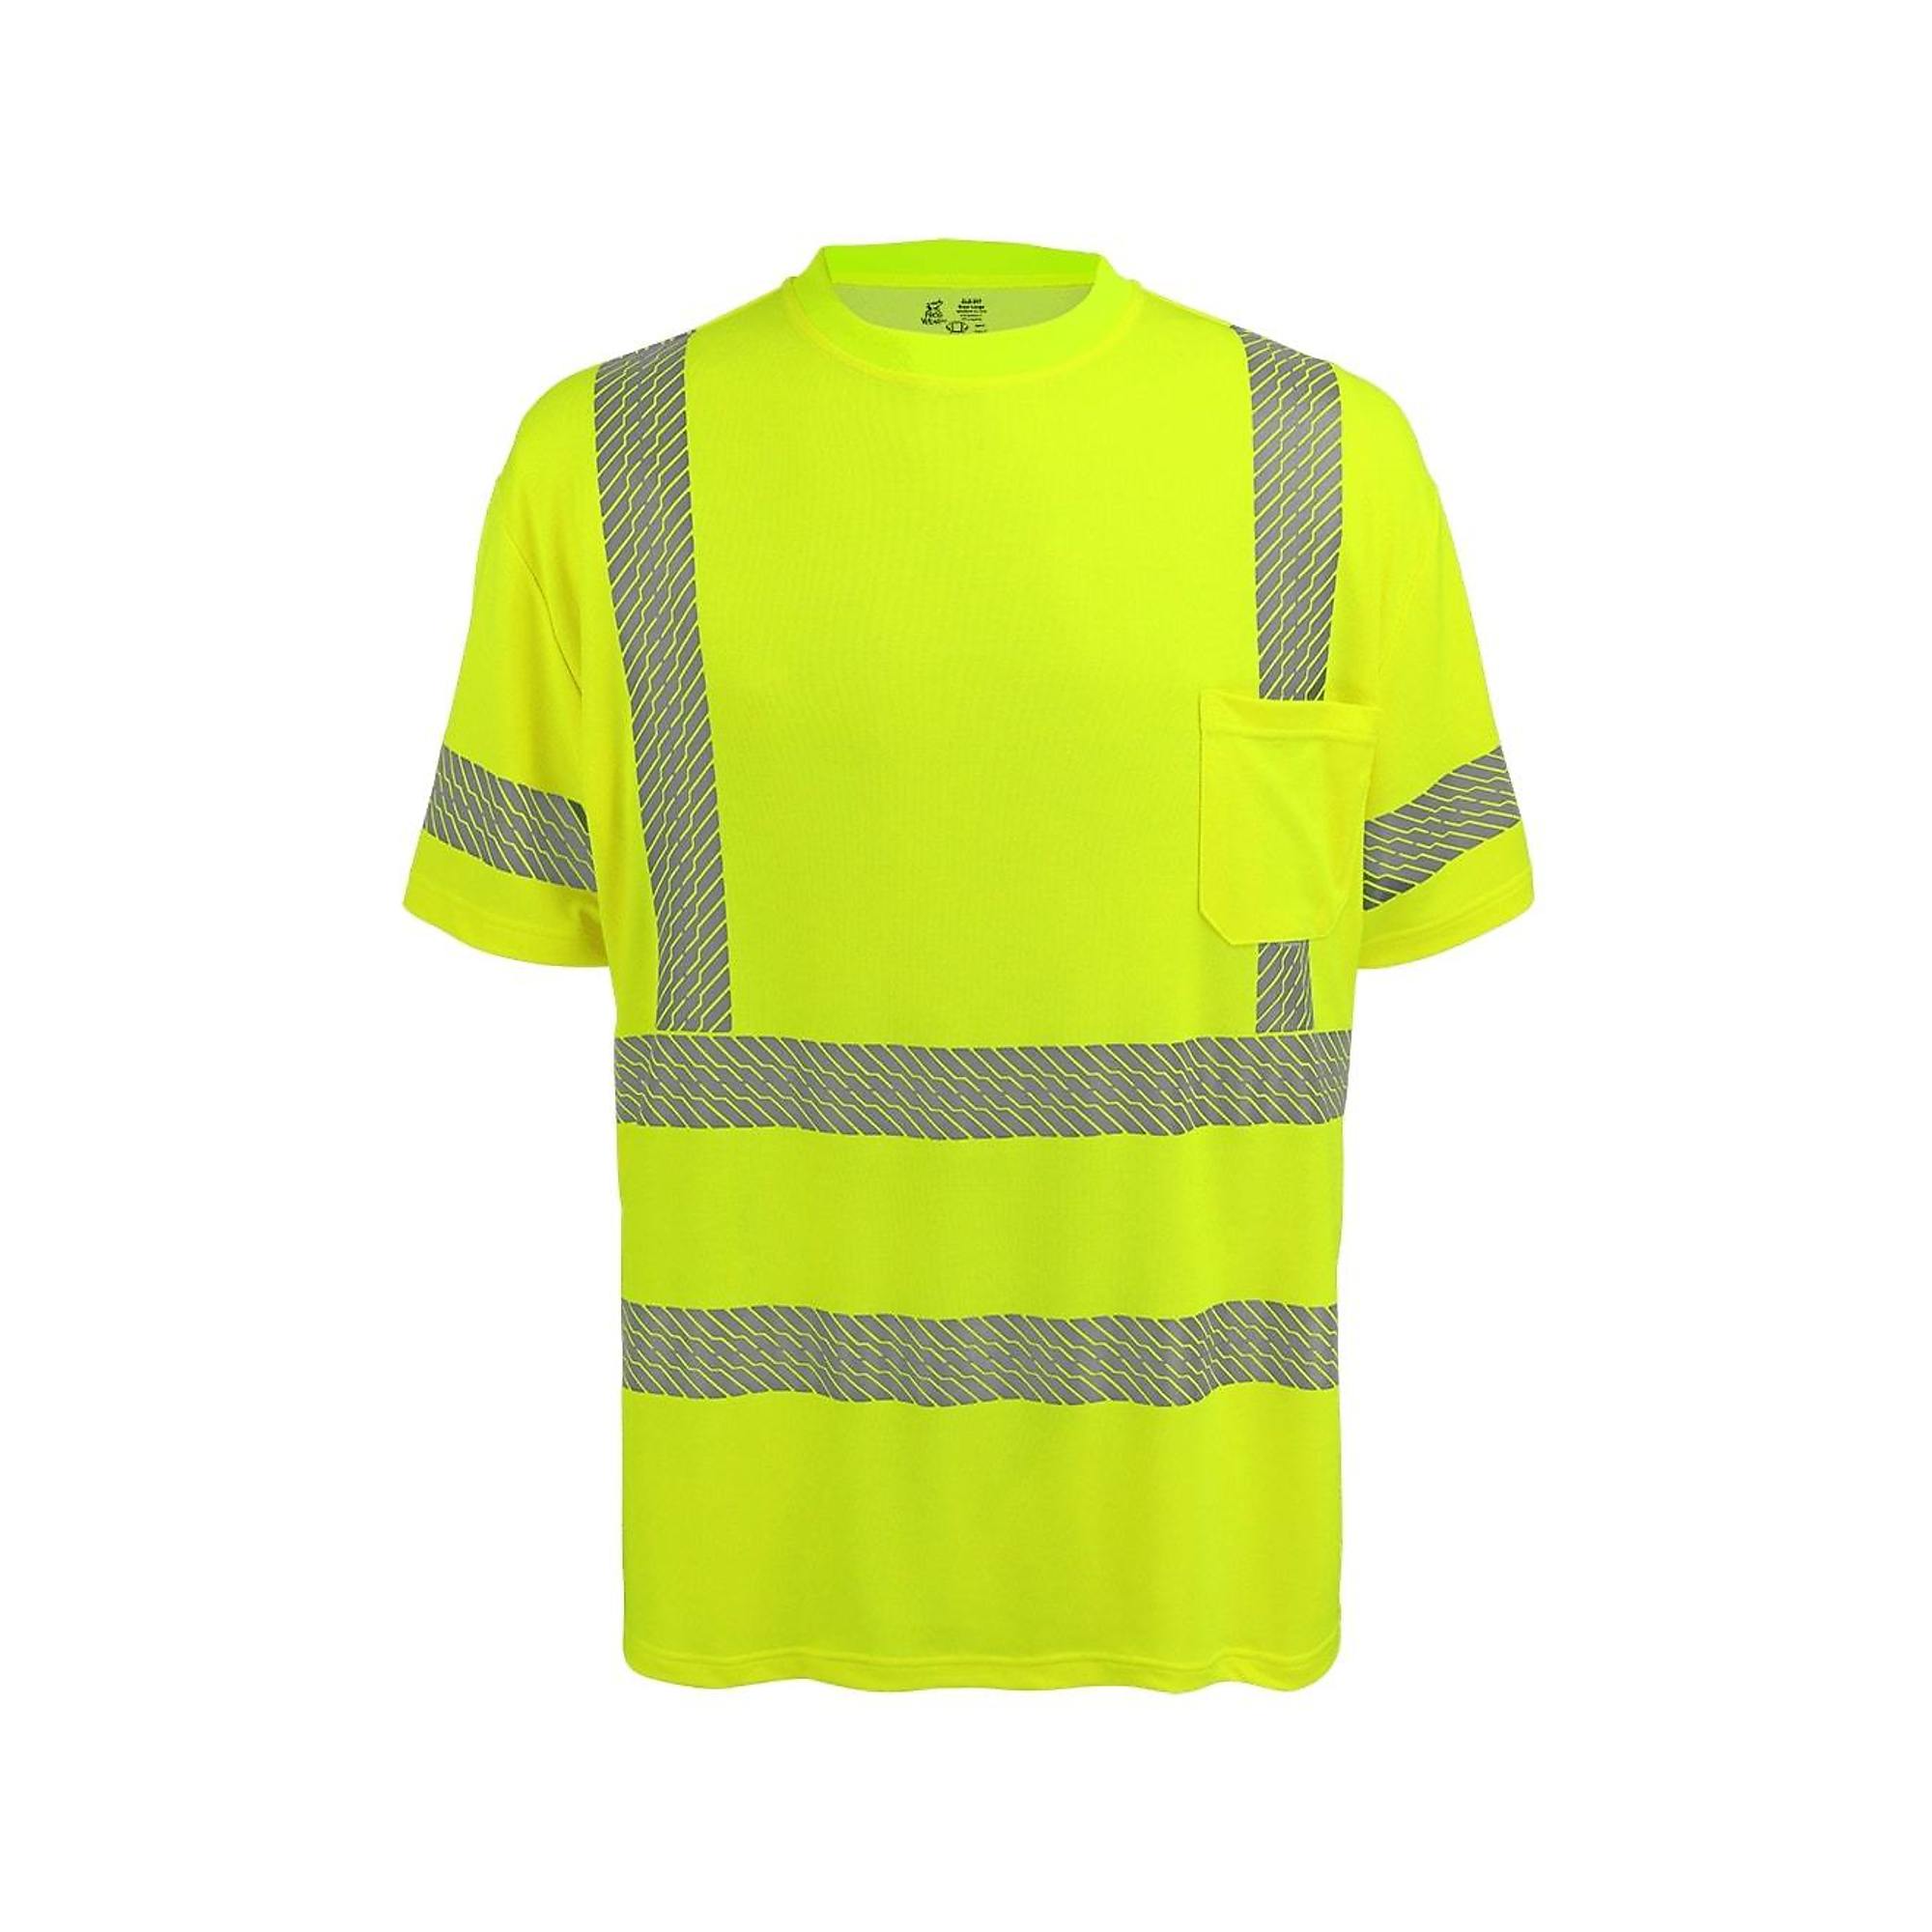 FrogWear, HV Yellow/Green,Class 3Bamboo Self-Wicking, Athletic Shirt, Size L, Model GLO-217-L